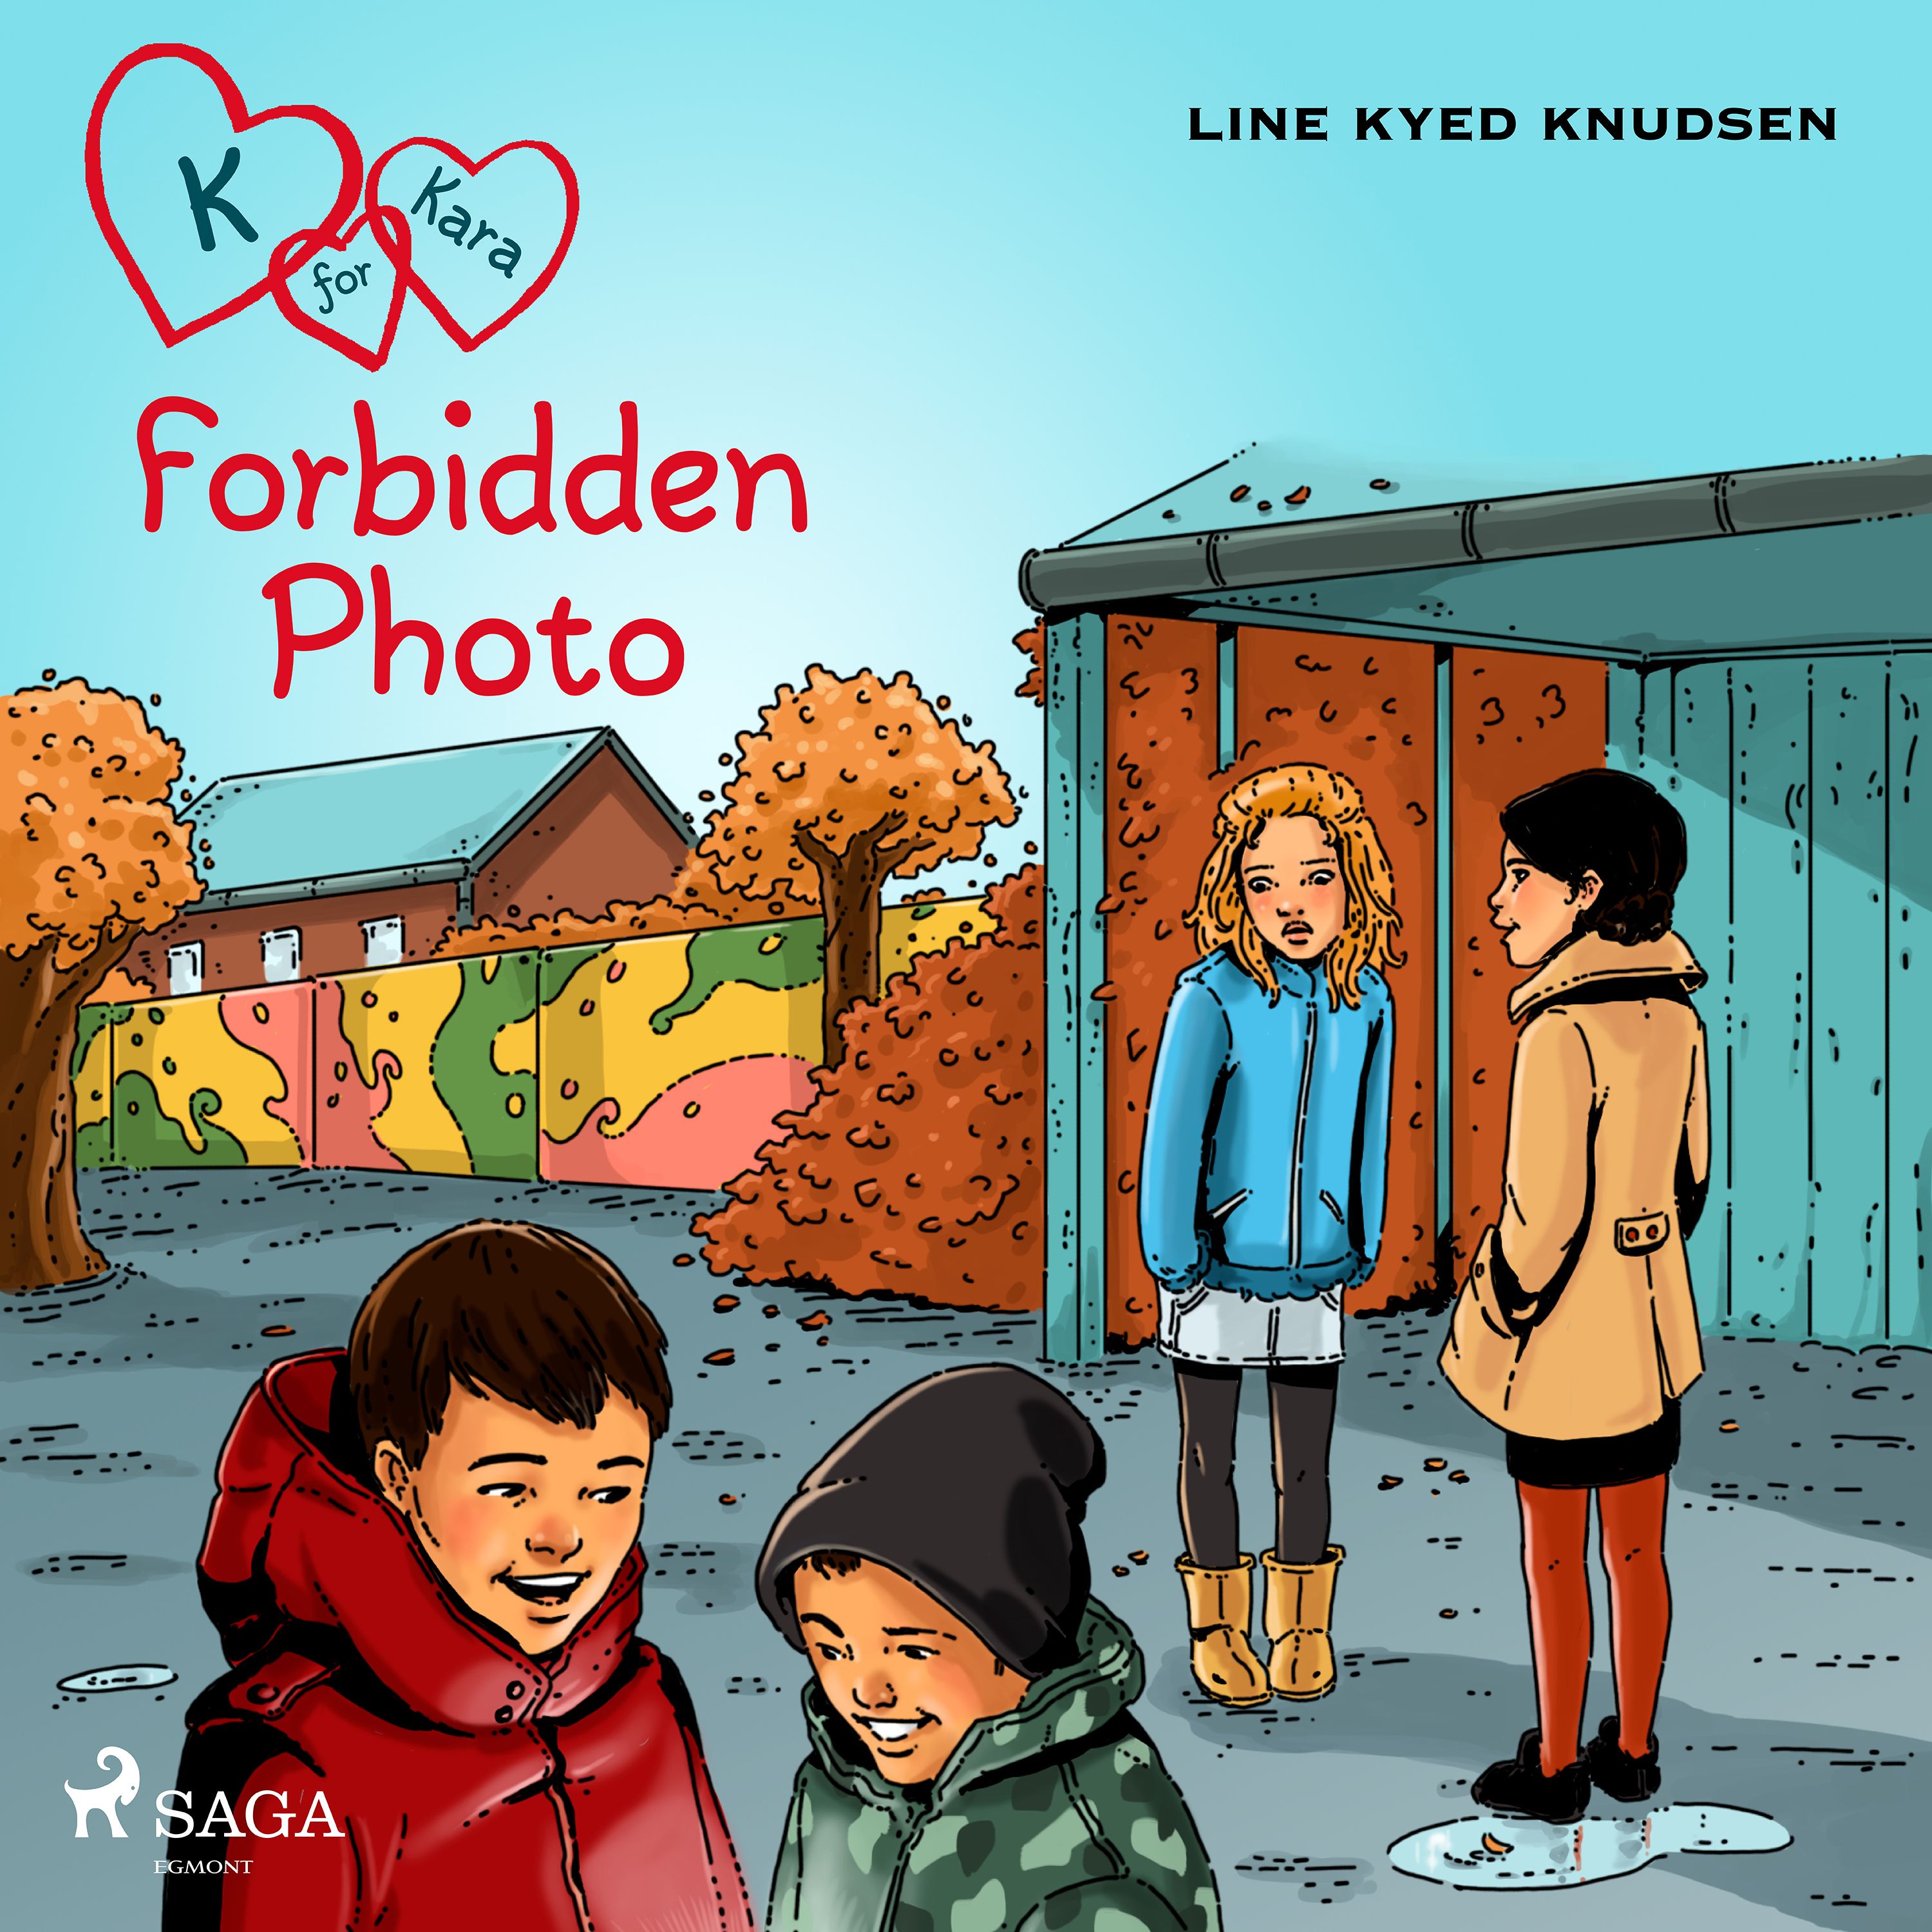 K for Kara 15 - Forbidden Photo, audiobook by Line Kyed Knudsen